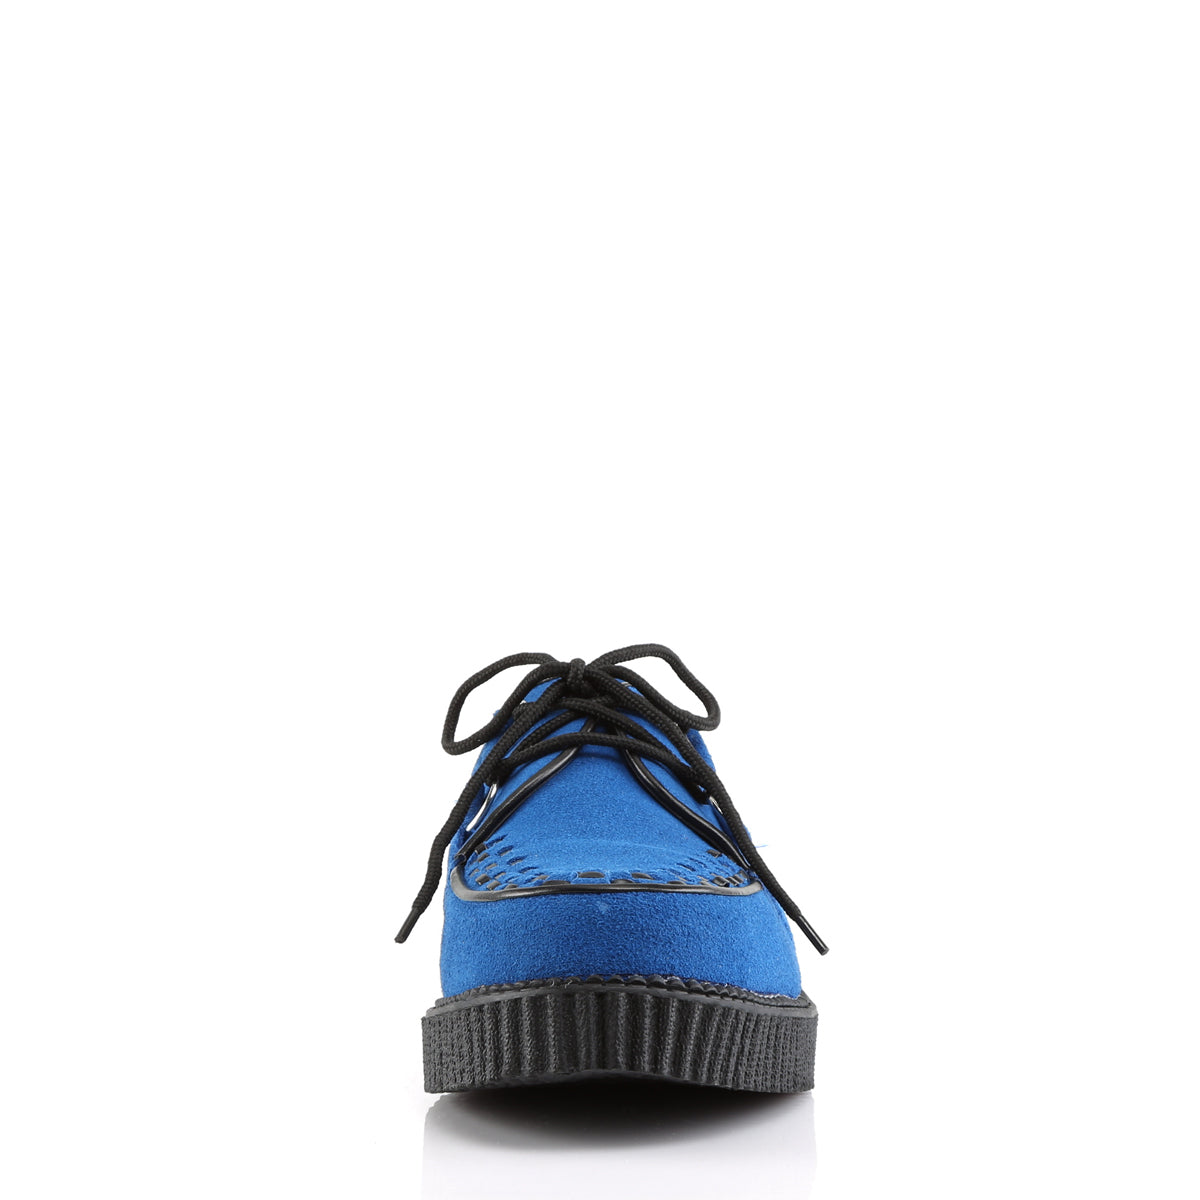 DemoniaCult Chaussure basse pour hommes Creeper-602S Suede bleu royal